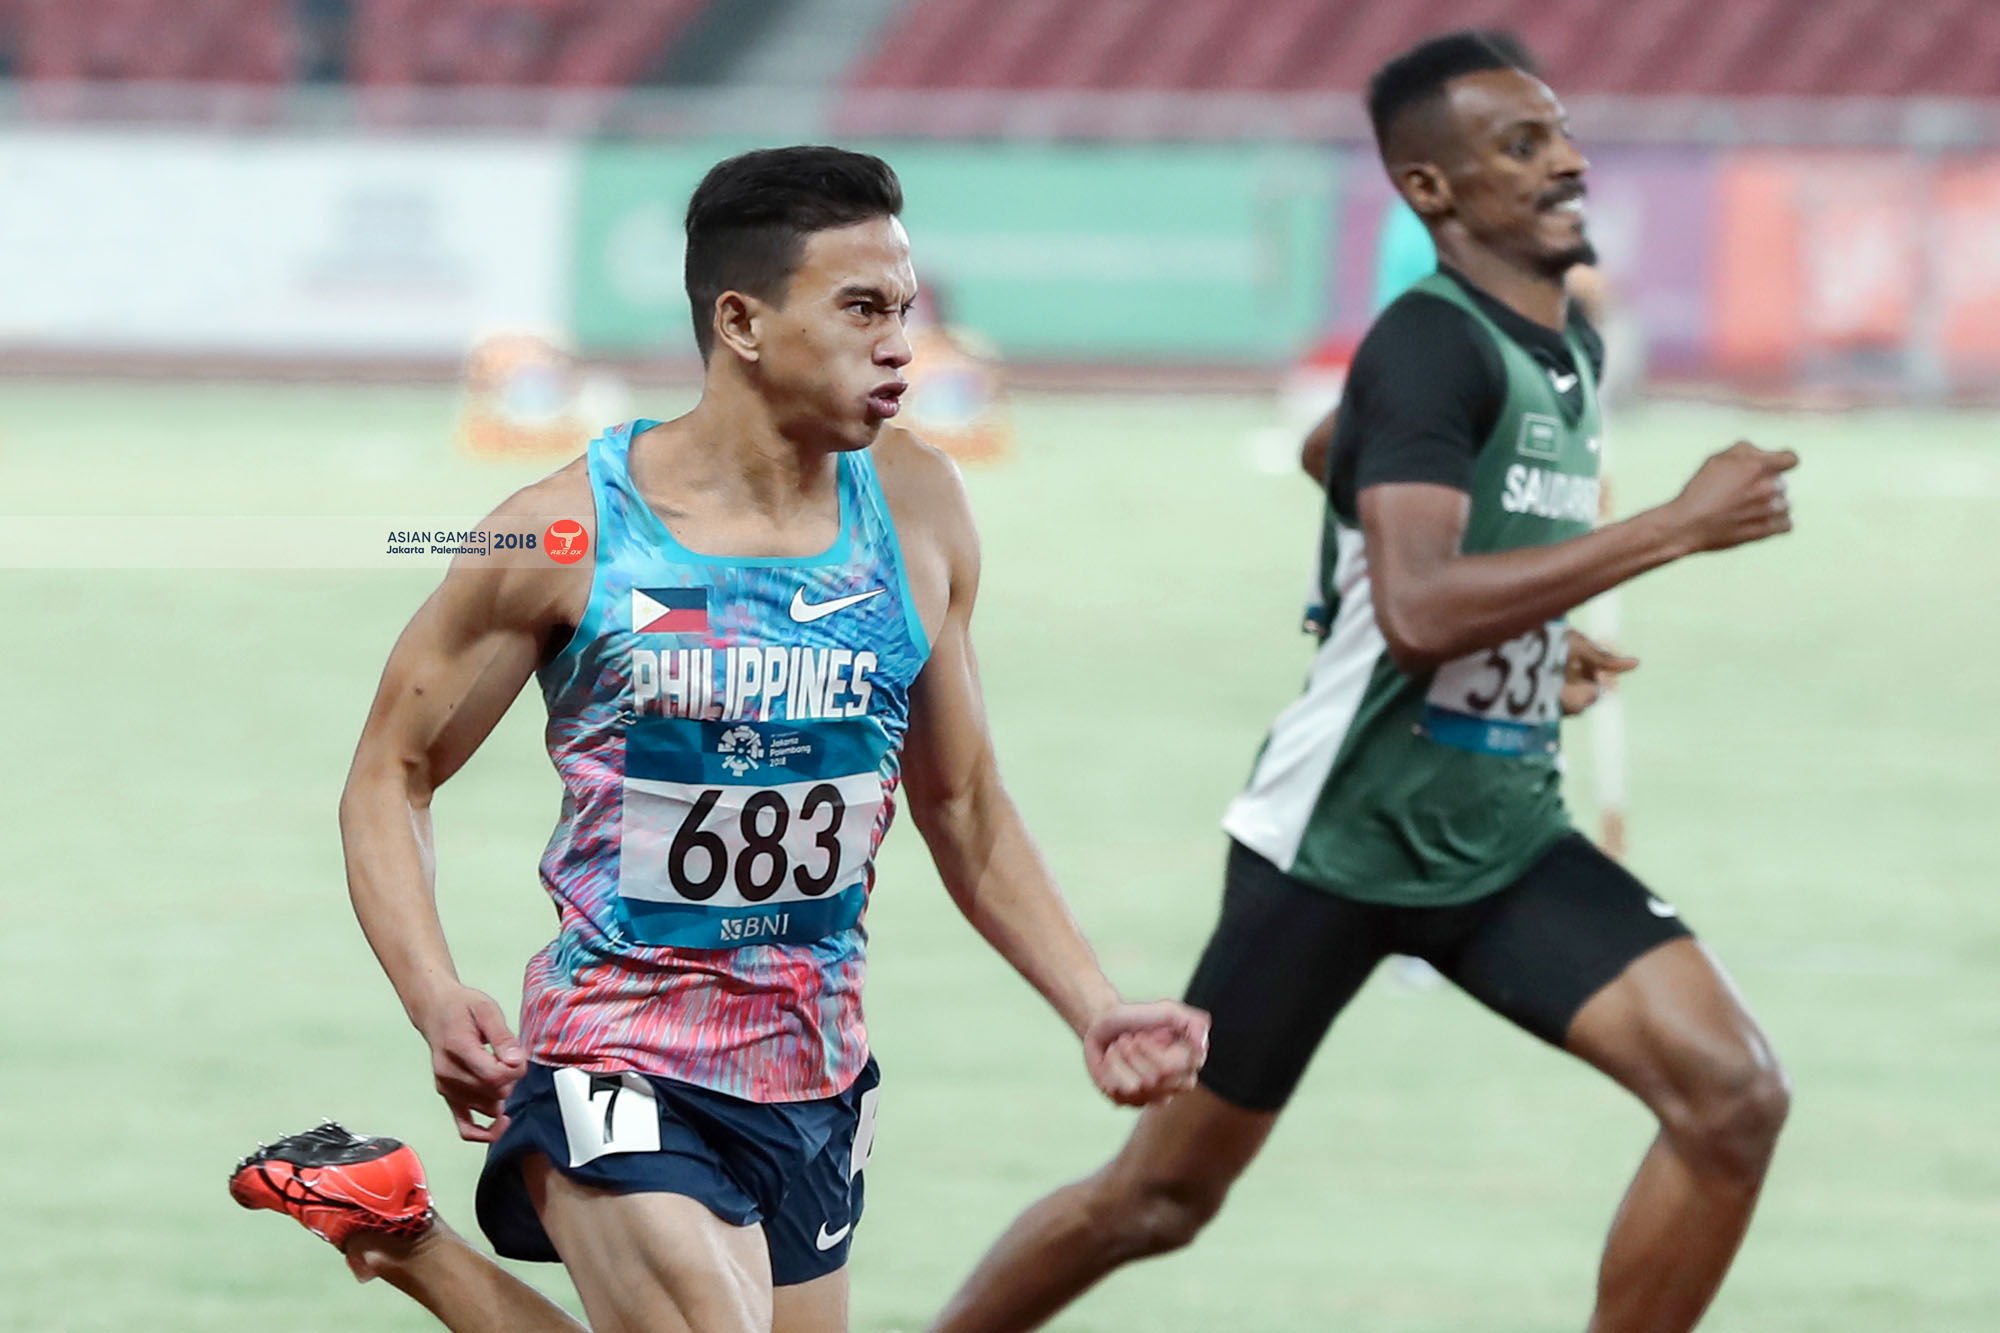 Asian Games 2018 Athletics – Francis Medina